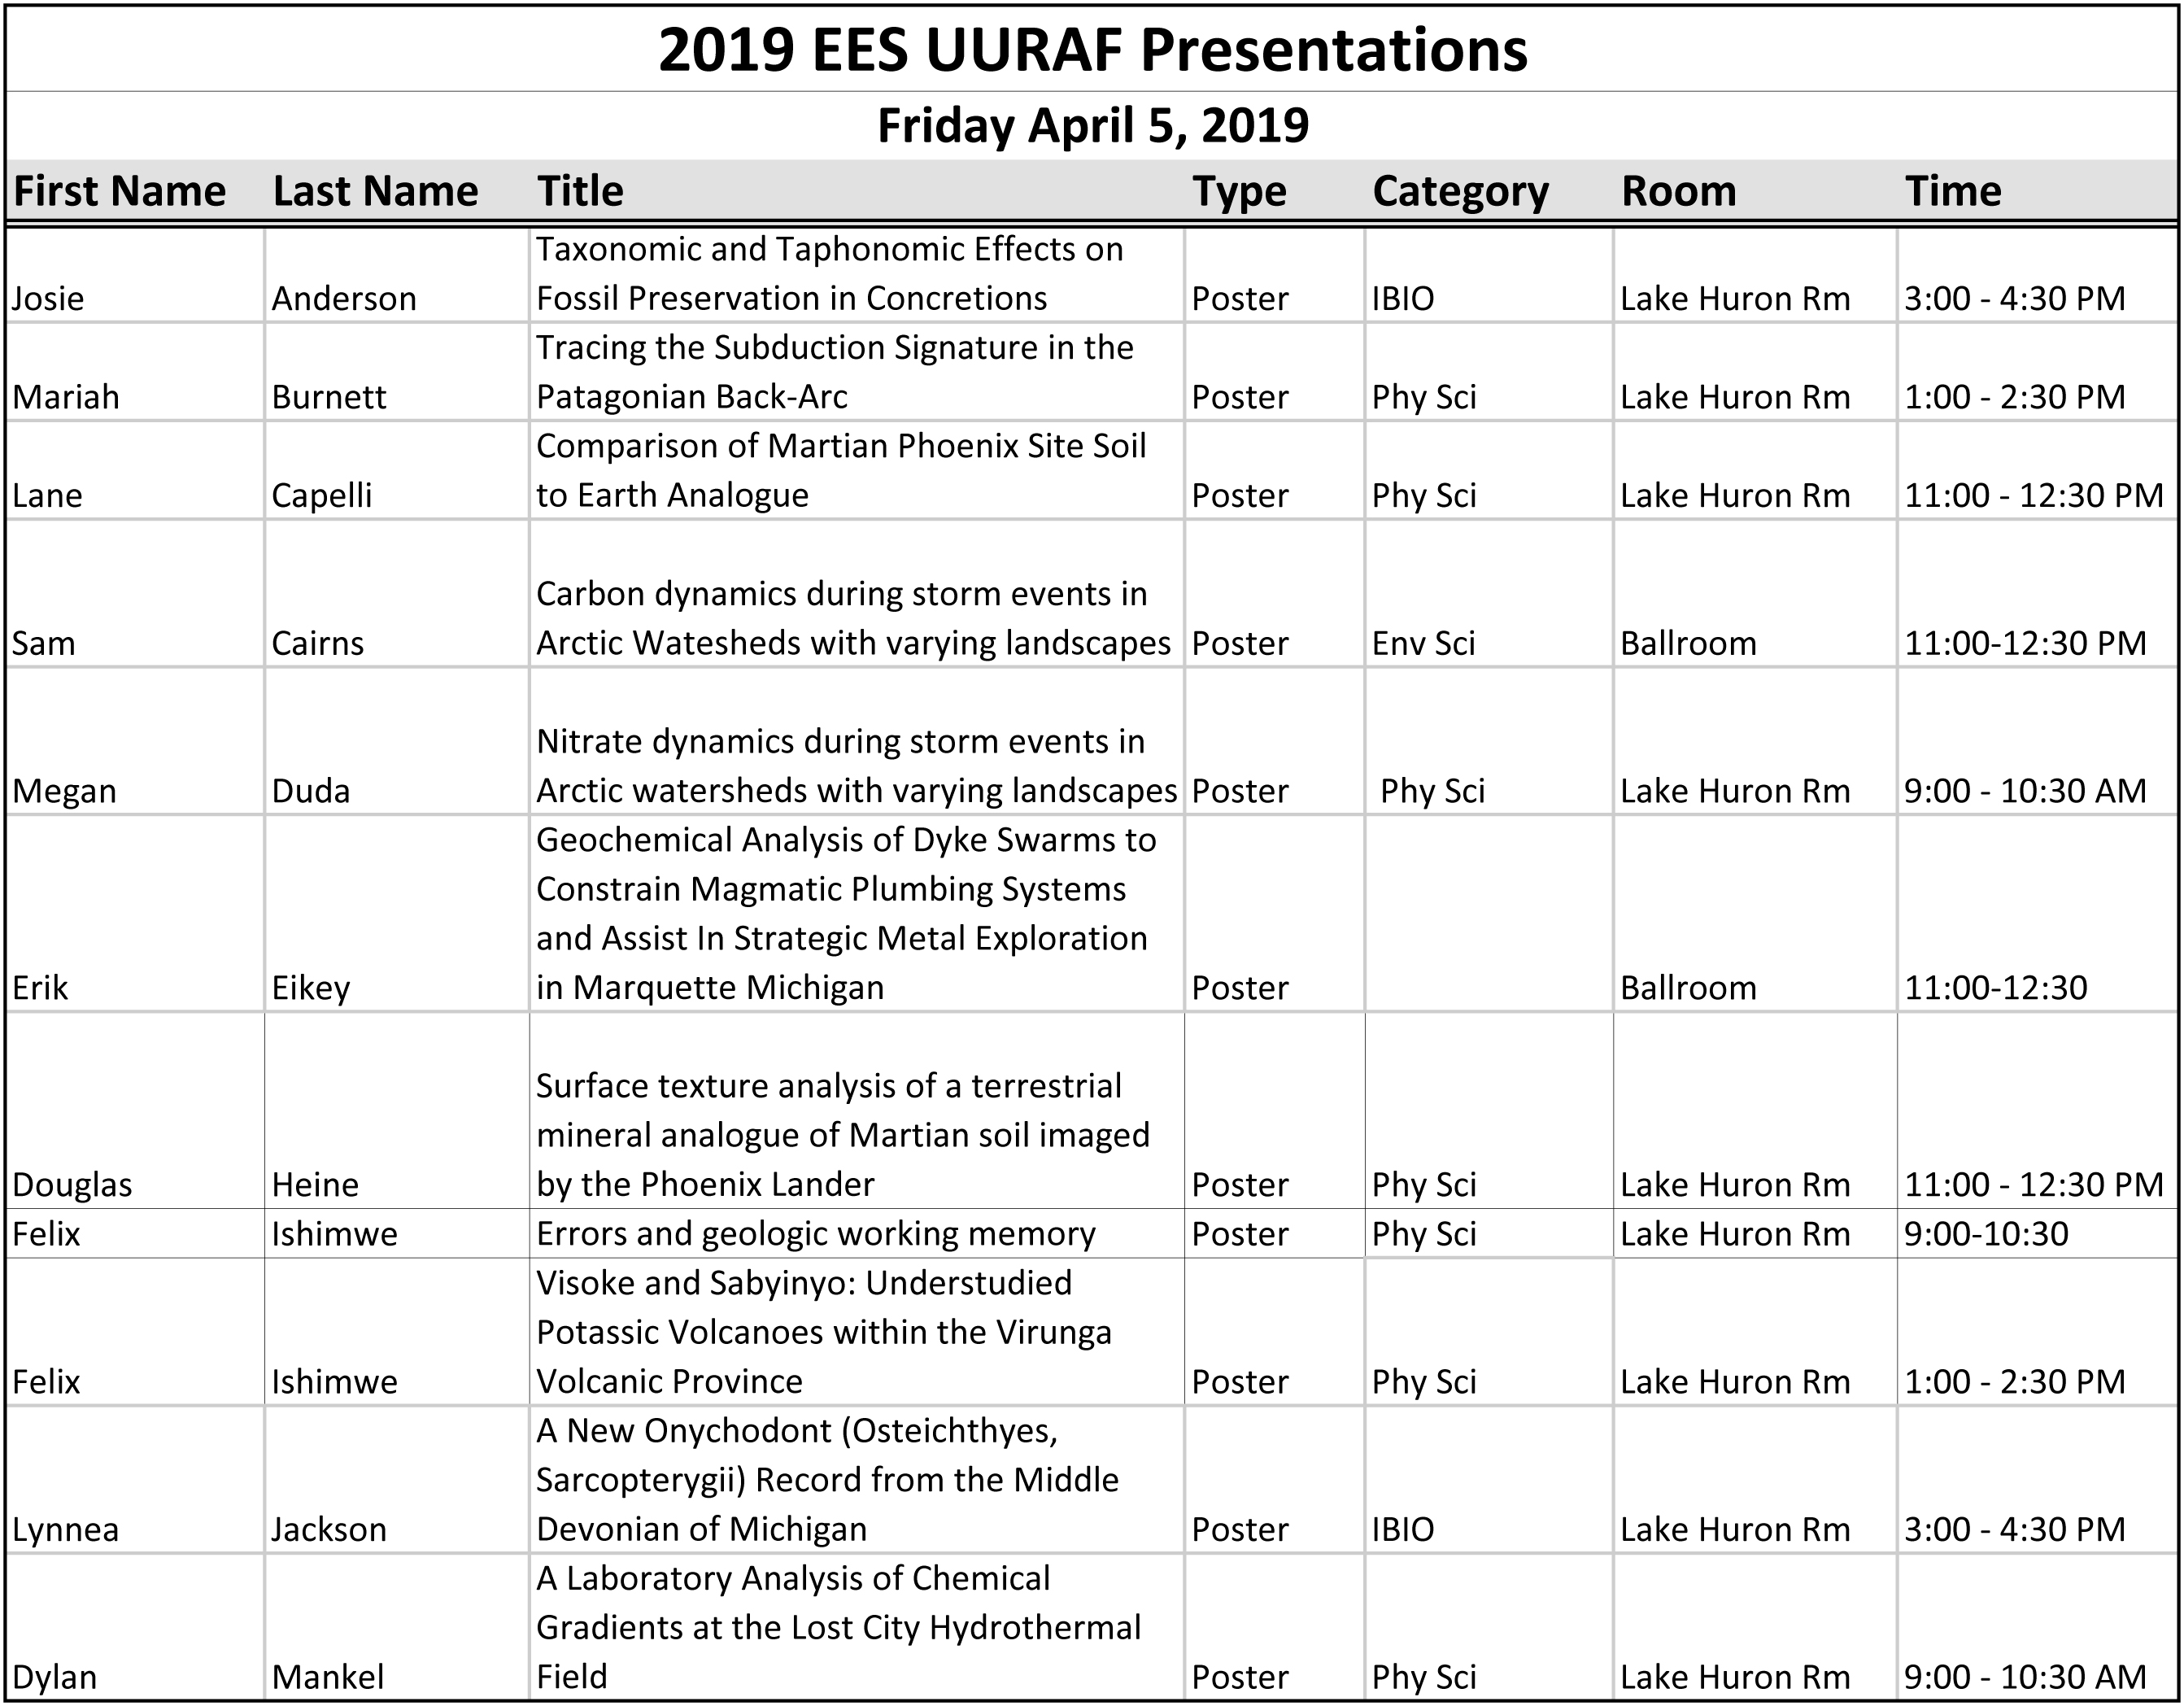 2019 UURAF Presentation Schedle